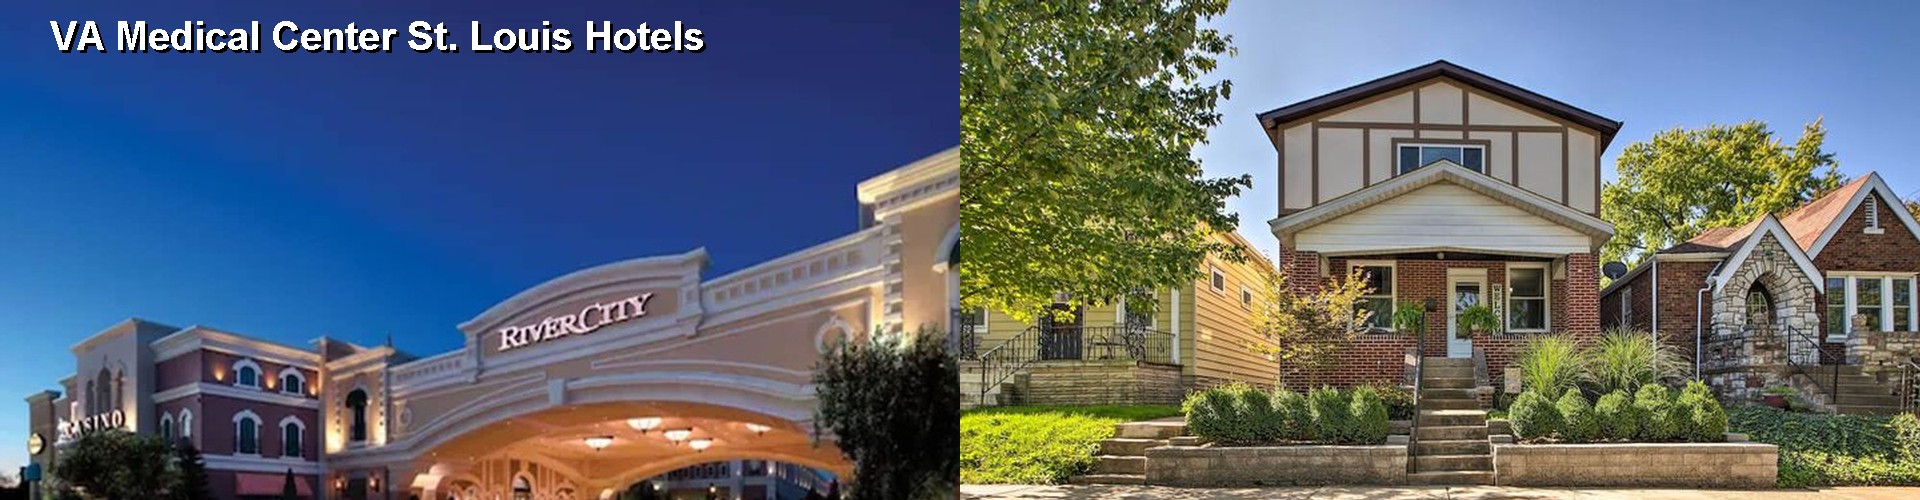 4 Best Hotels near VA Medical Center St. Louis